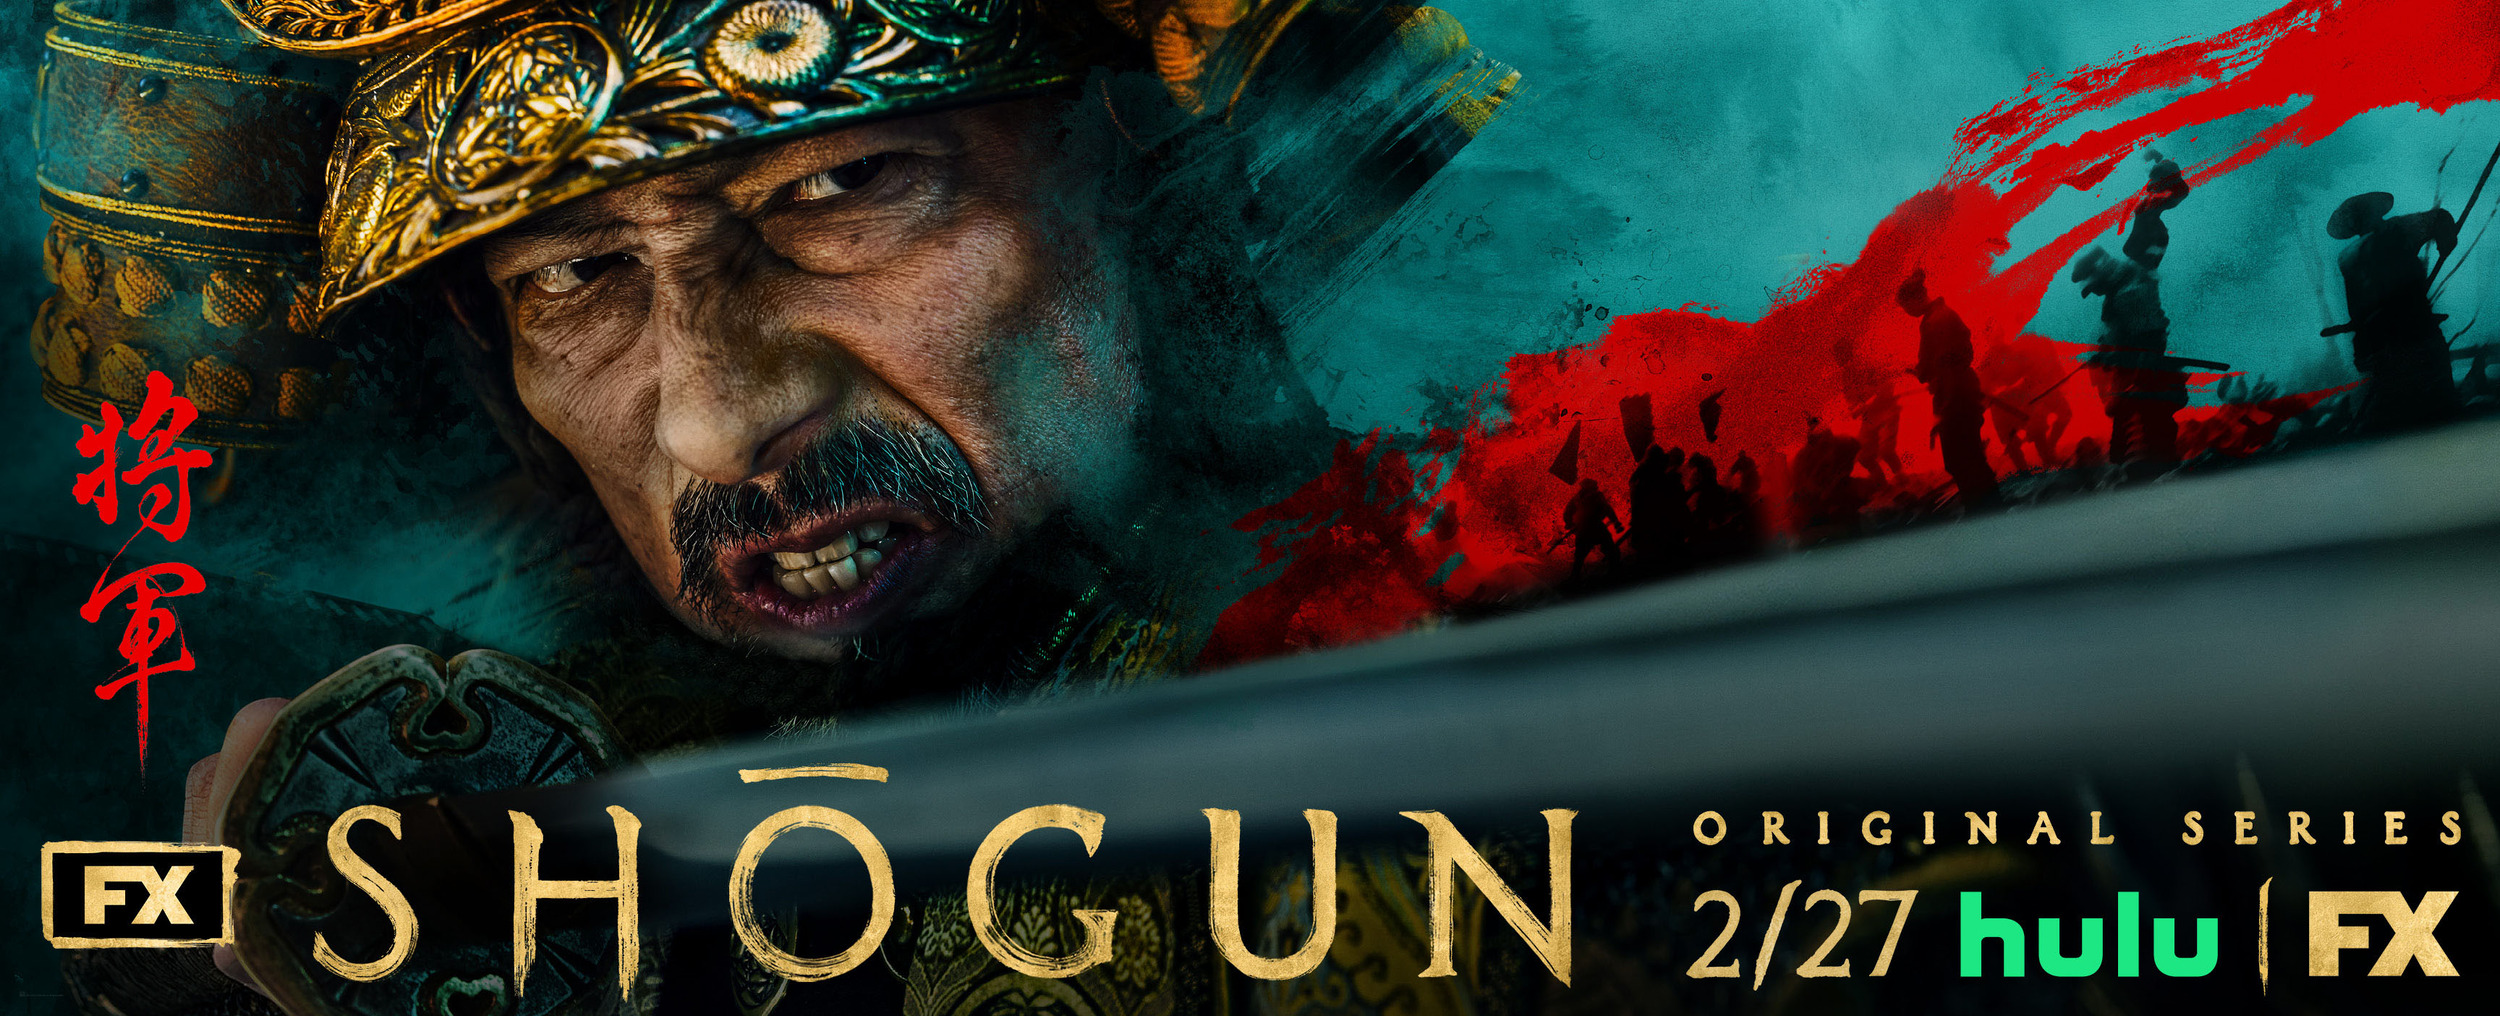 Mega Sized TV Poster Image for Shogun (#24 of 24)